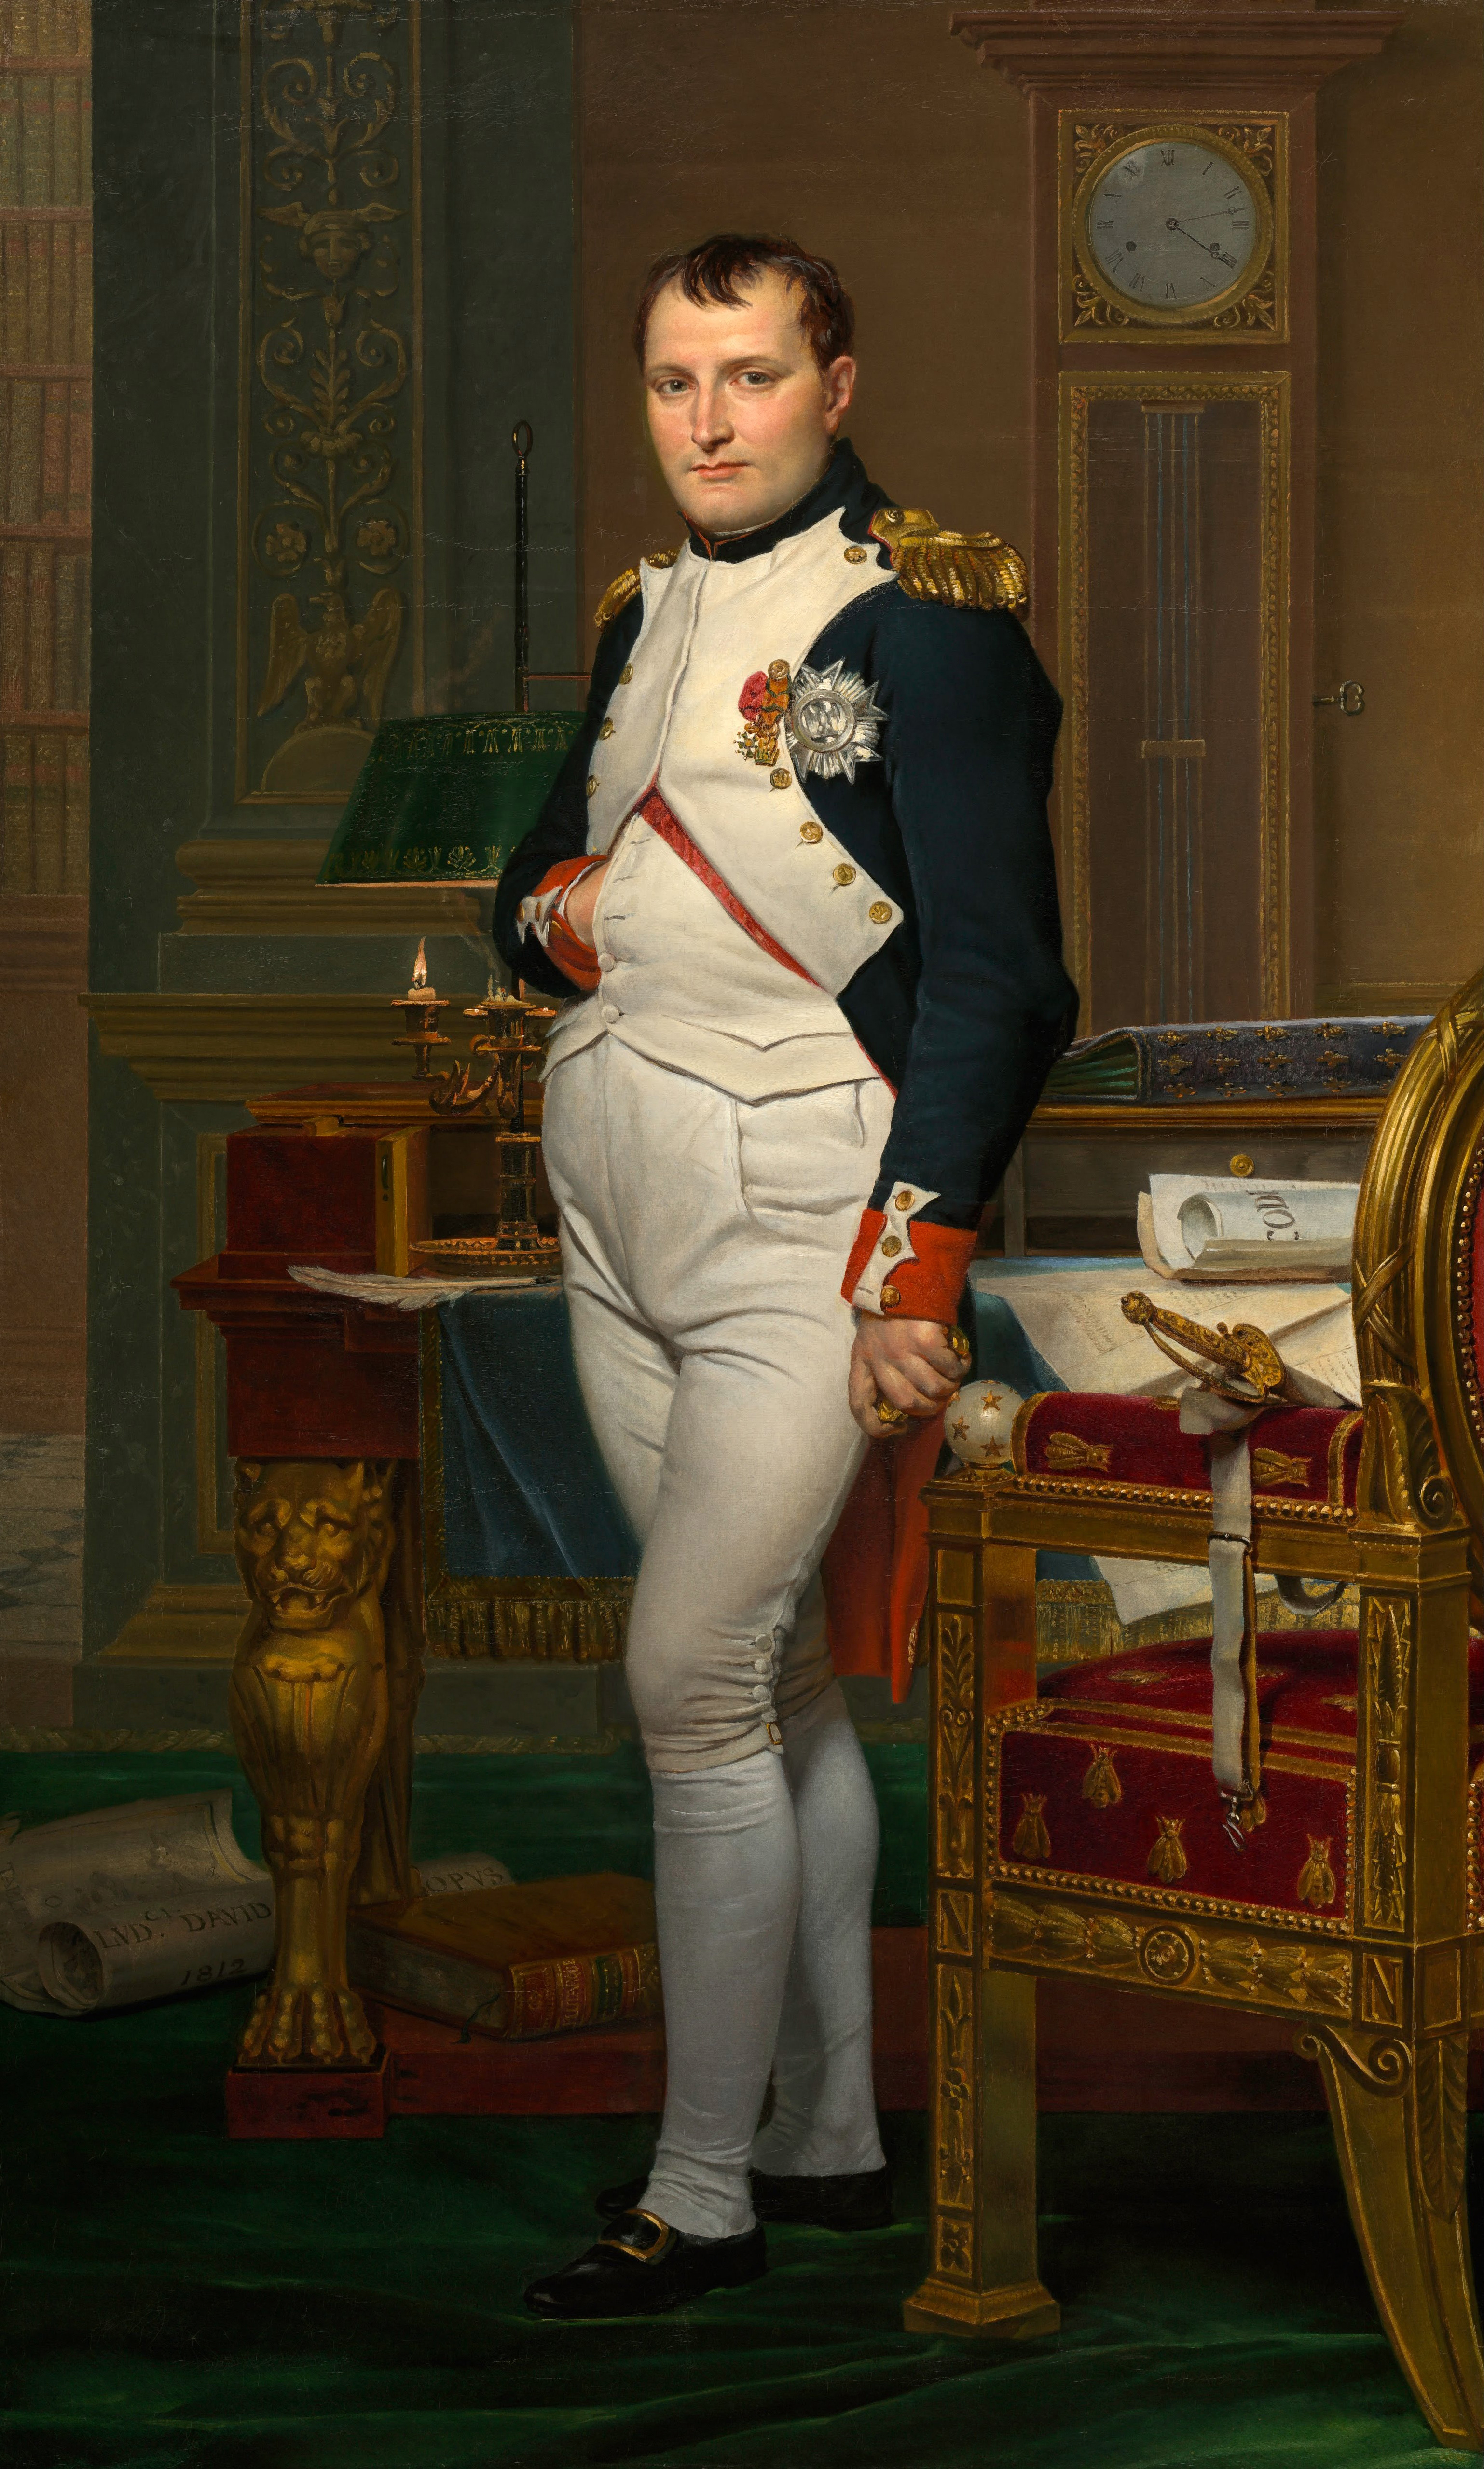 Napoleon - Famous image